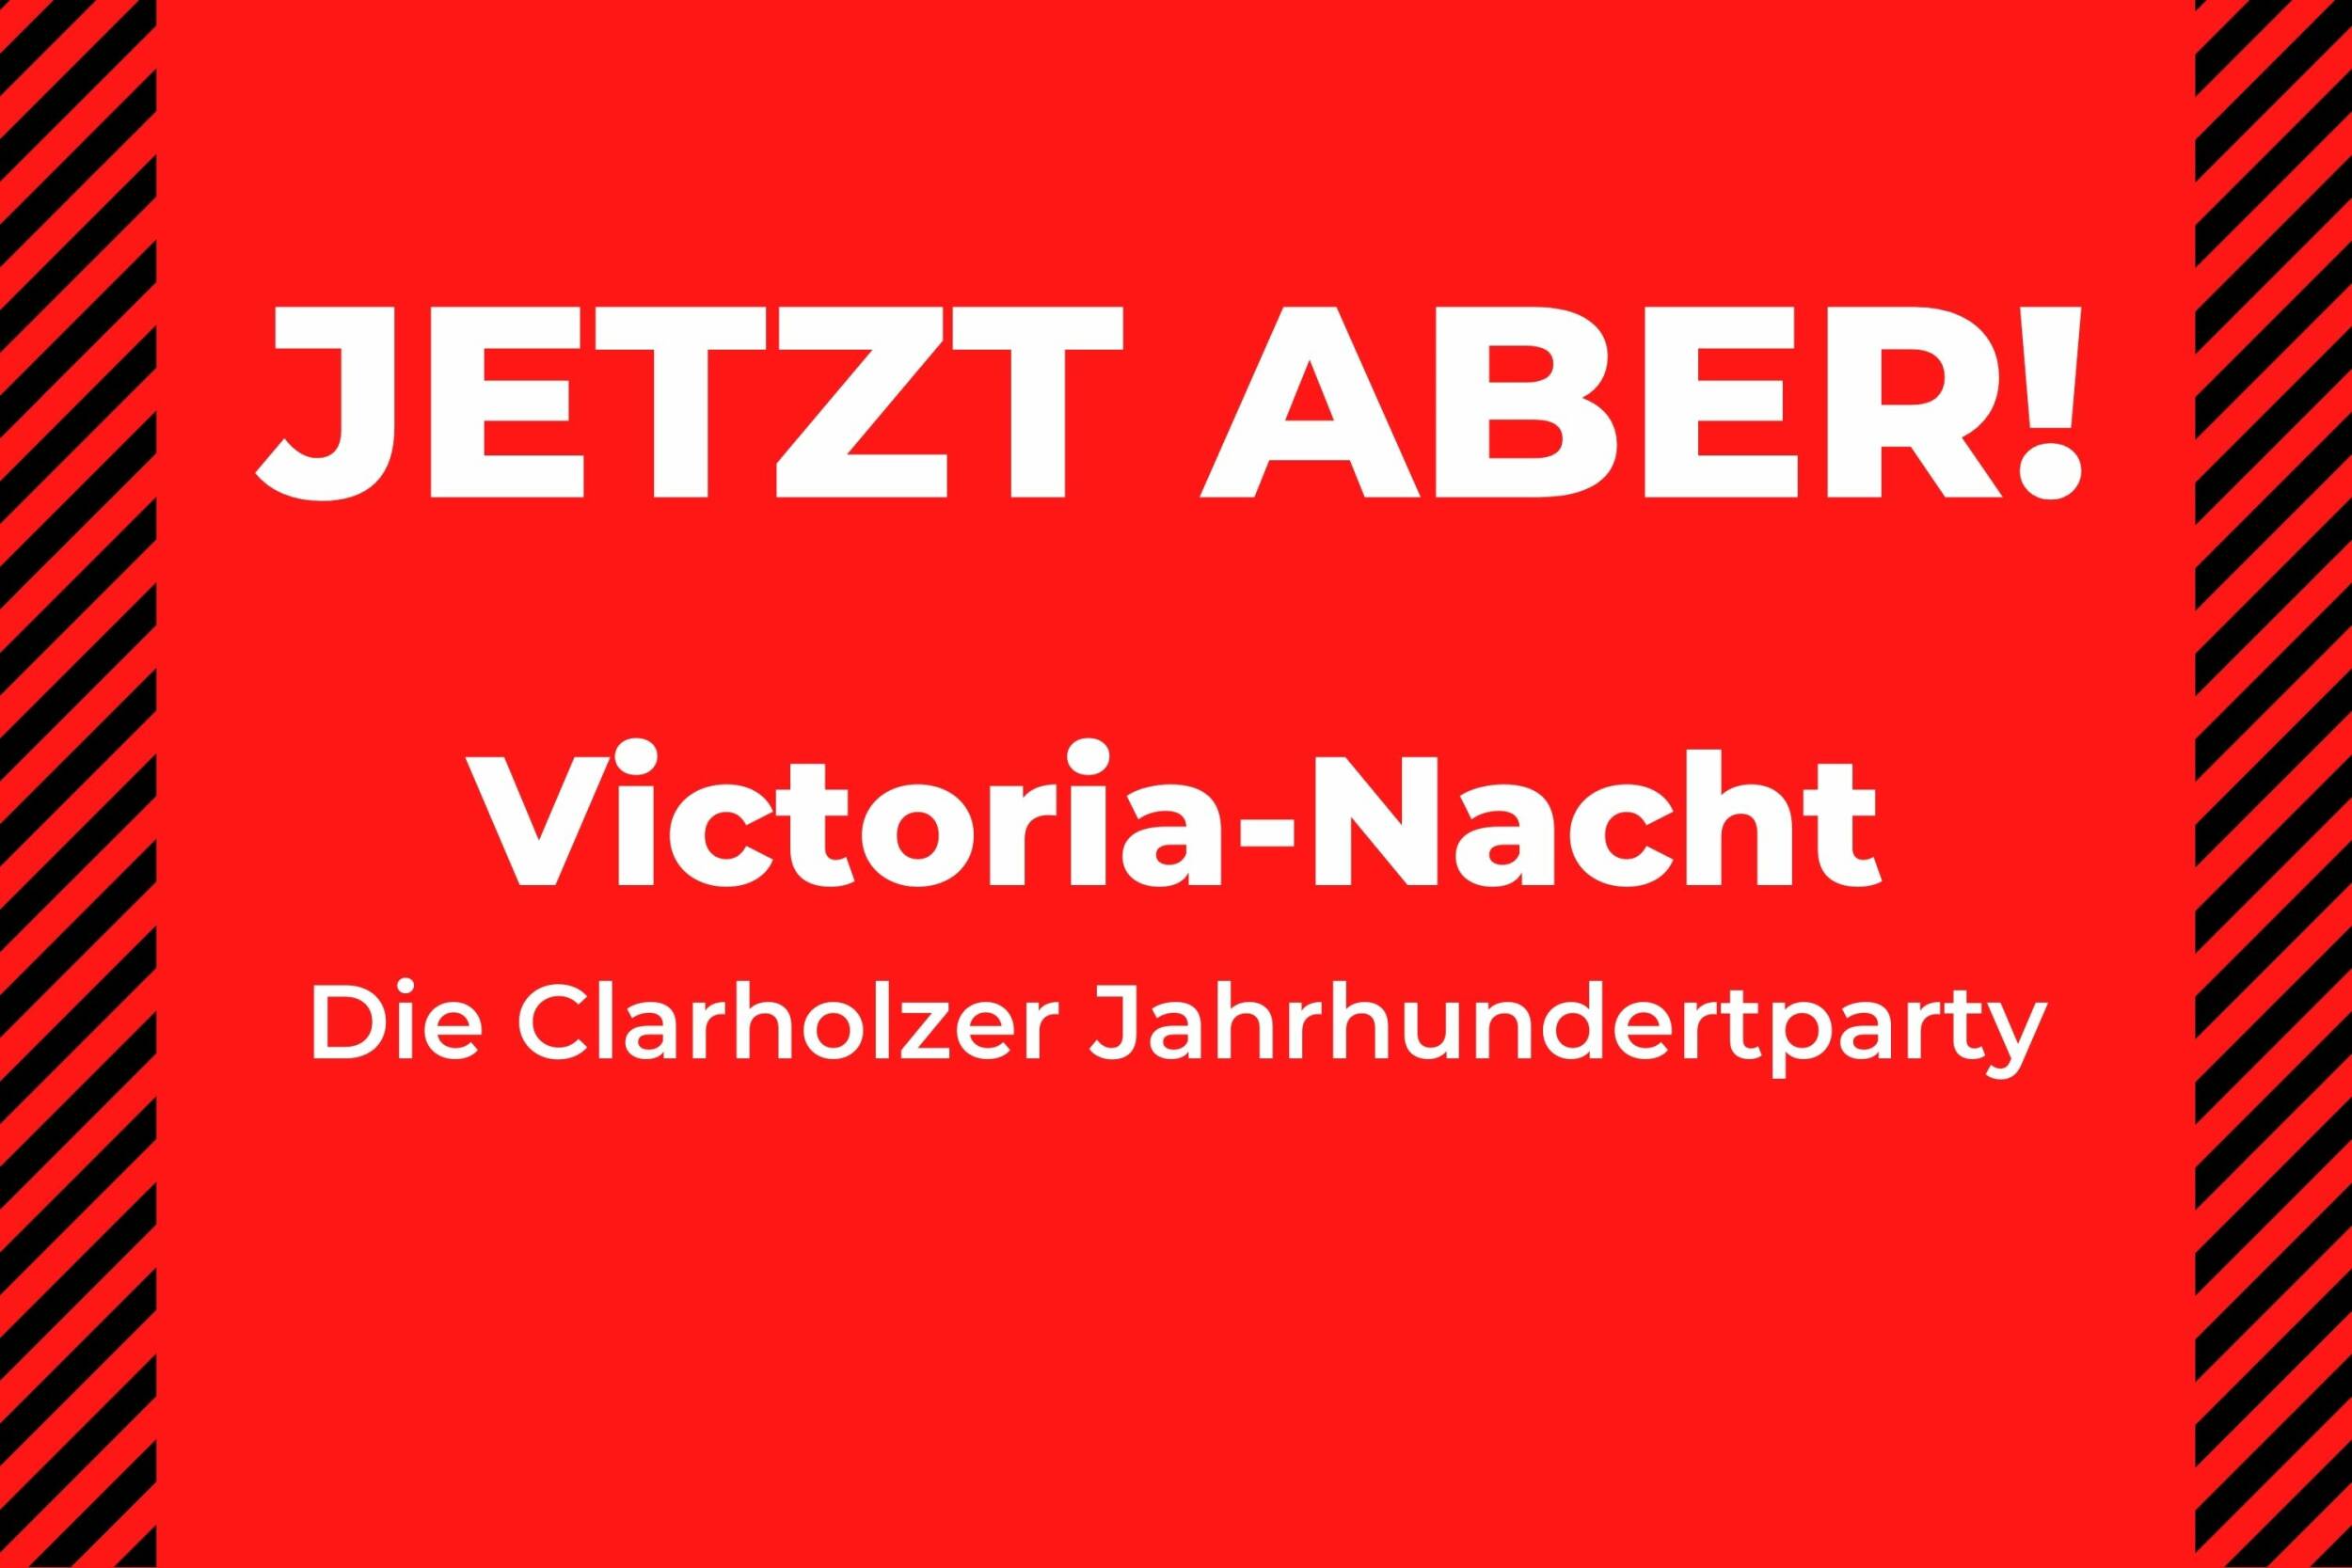 Victoria Clarholz<br>Victoria-Nacht